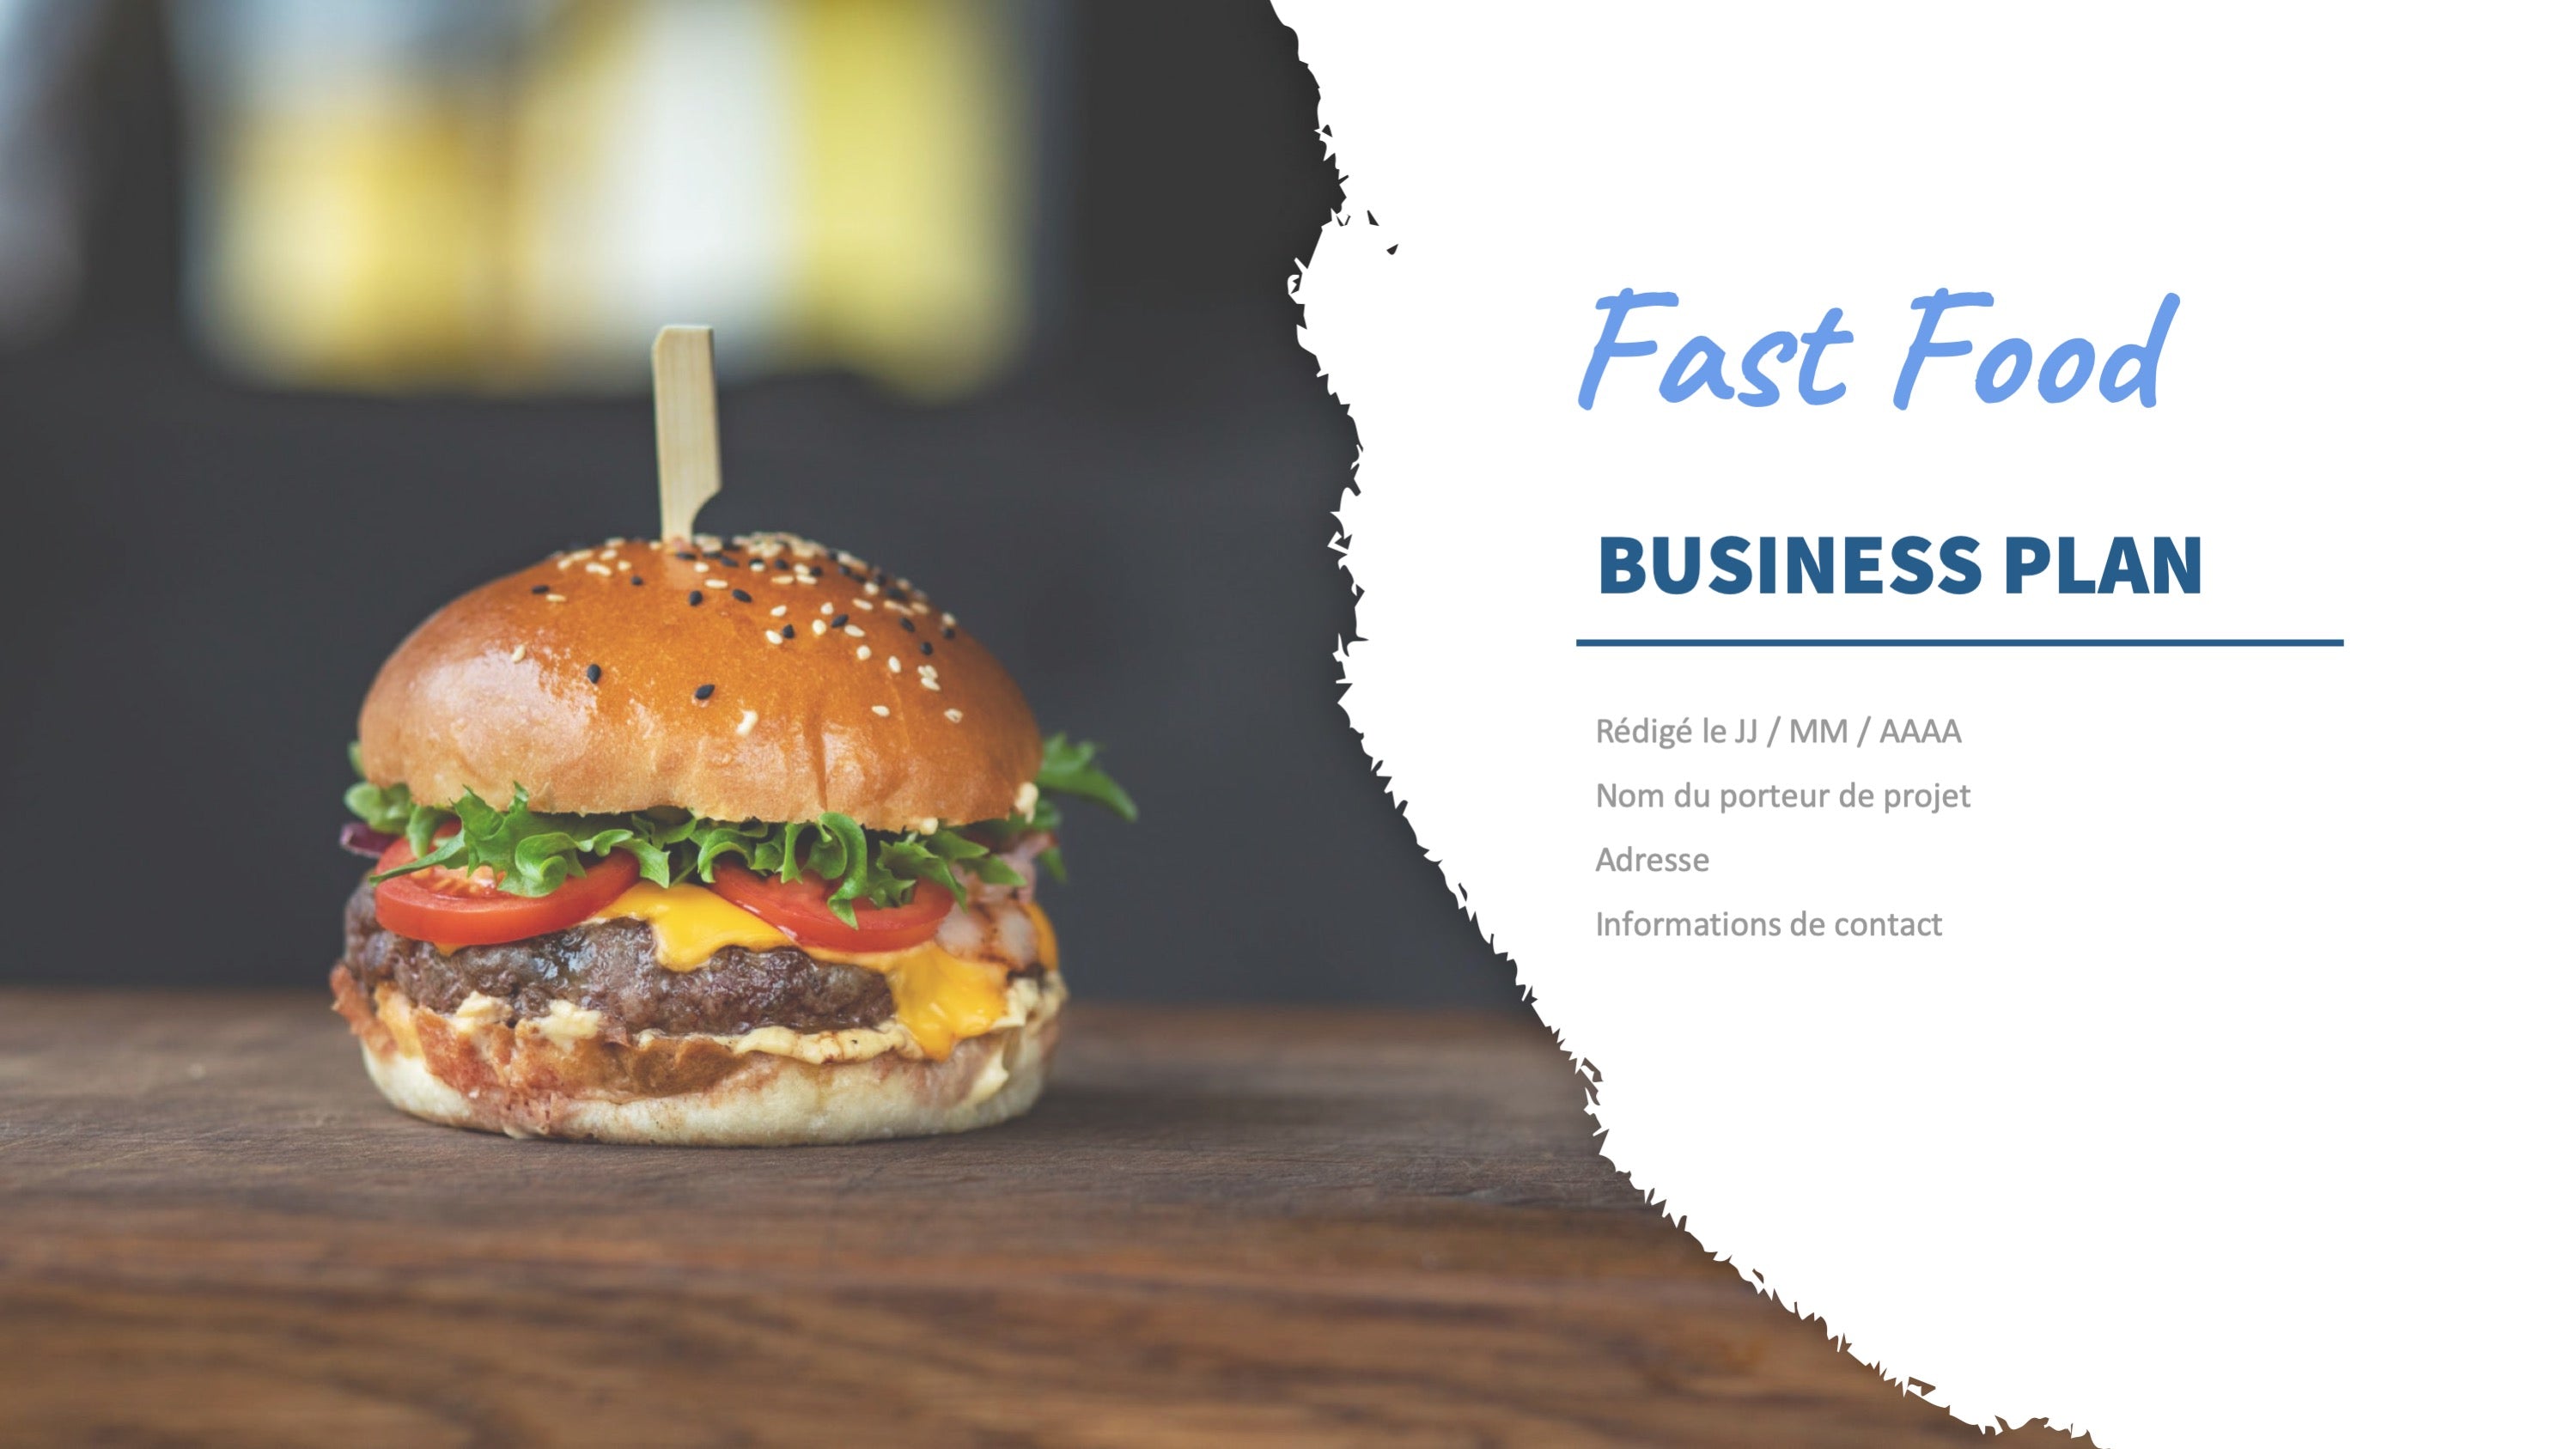 business plan on fast food restaurant